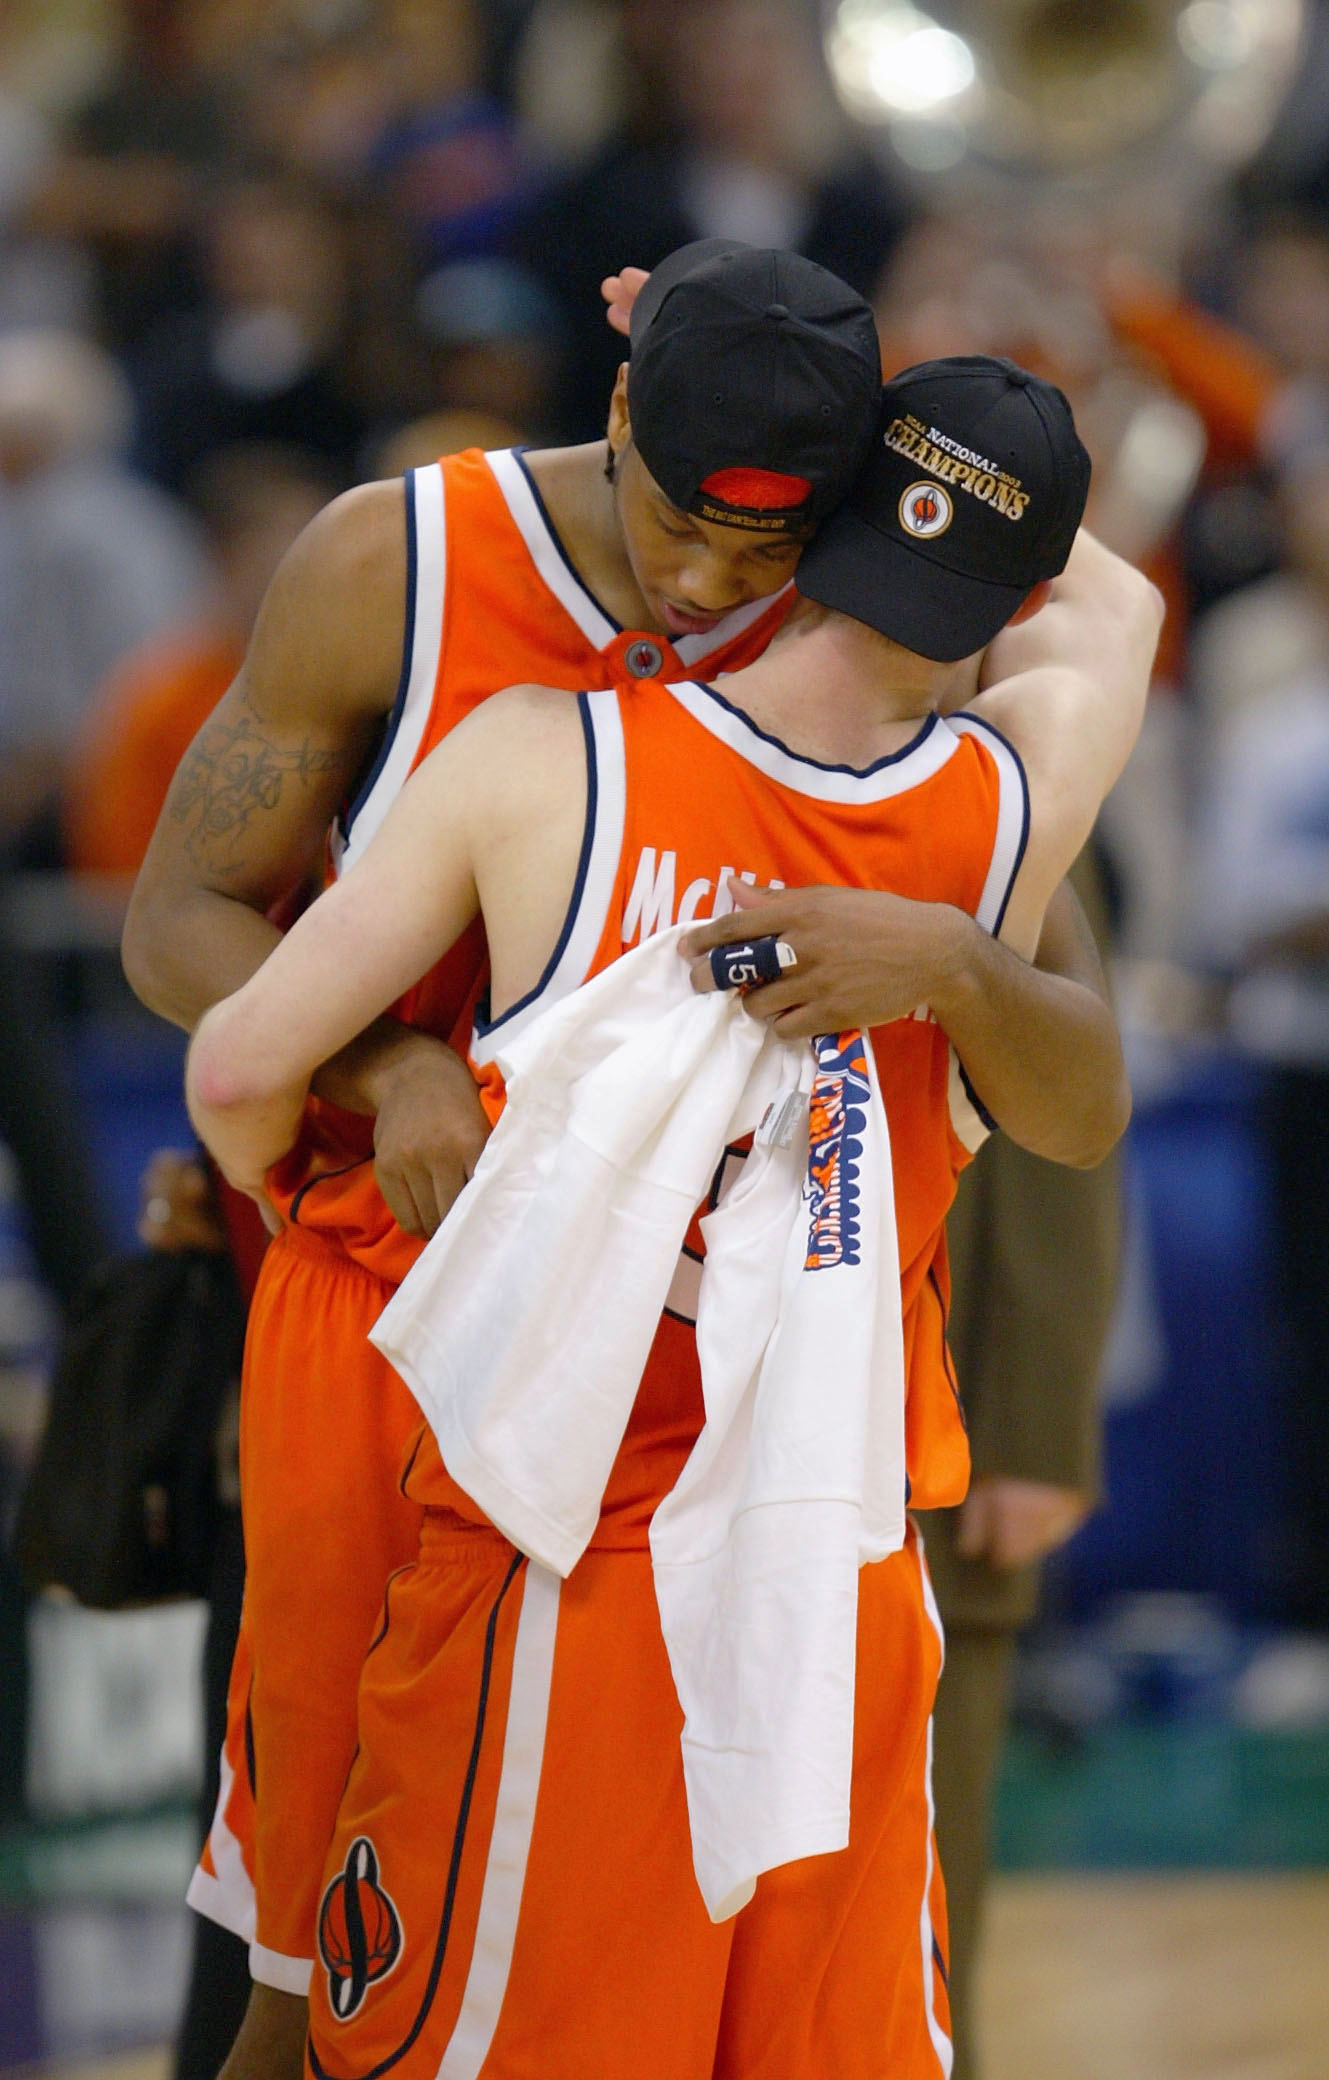 Carmelo Anthony of Syracuse hugs teammate Gerry McNamara after winning the 2003 NCAA championship. (Craig Jones/Getty Images)